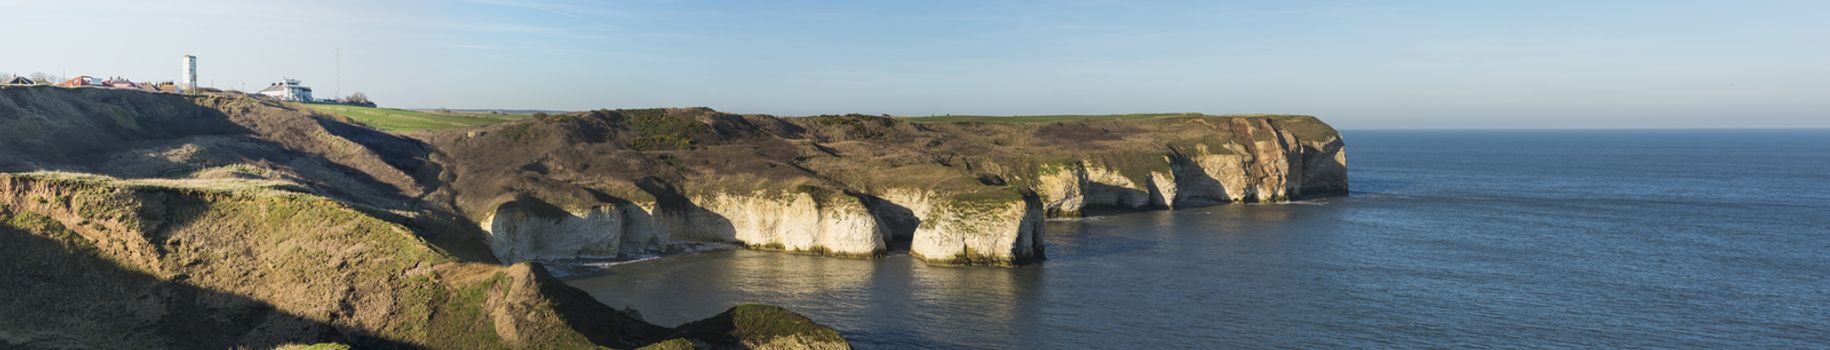 Landscape coastal scene of large chalks cliffs coastline dropping into sea